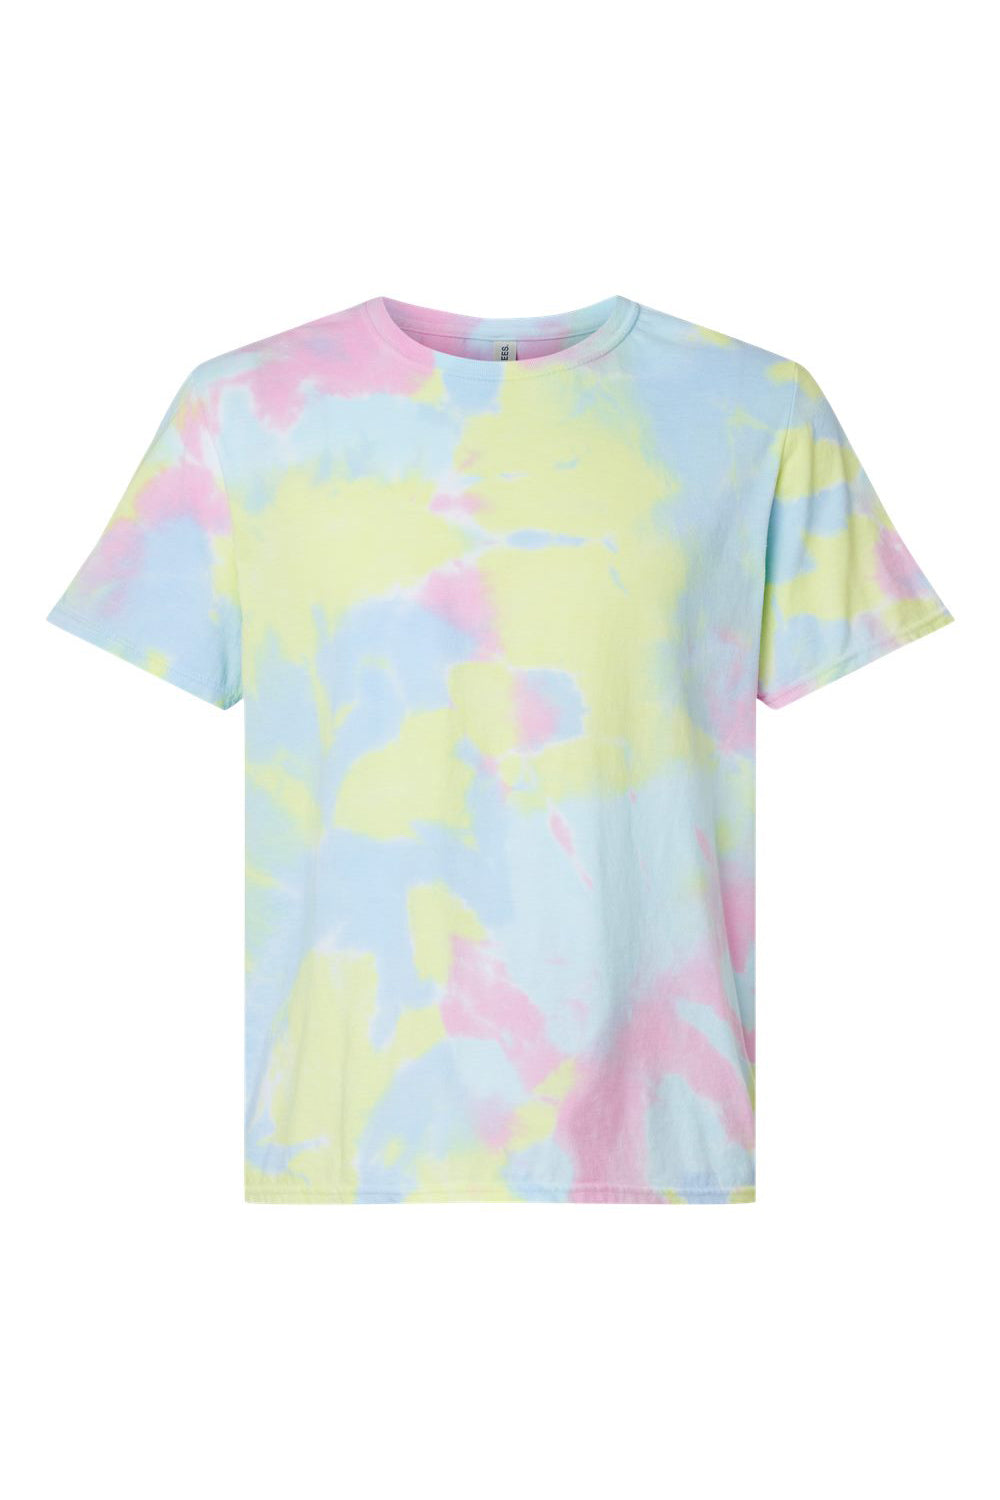 Dyenomite 650DR Mens Dream Tie Dyed Short Sleeve Crewneck T-Shirt Pastel Rainbow Flat Front